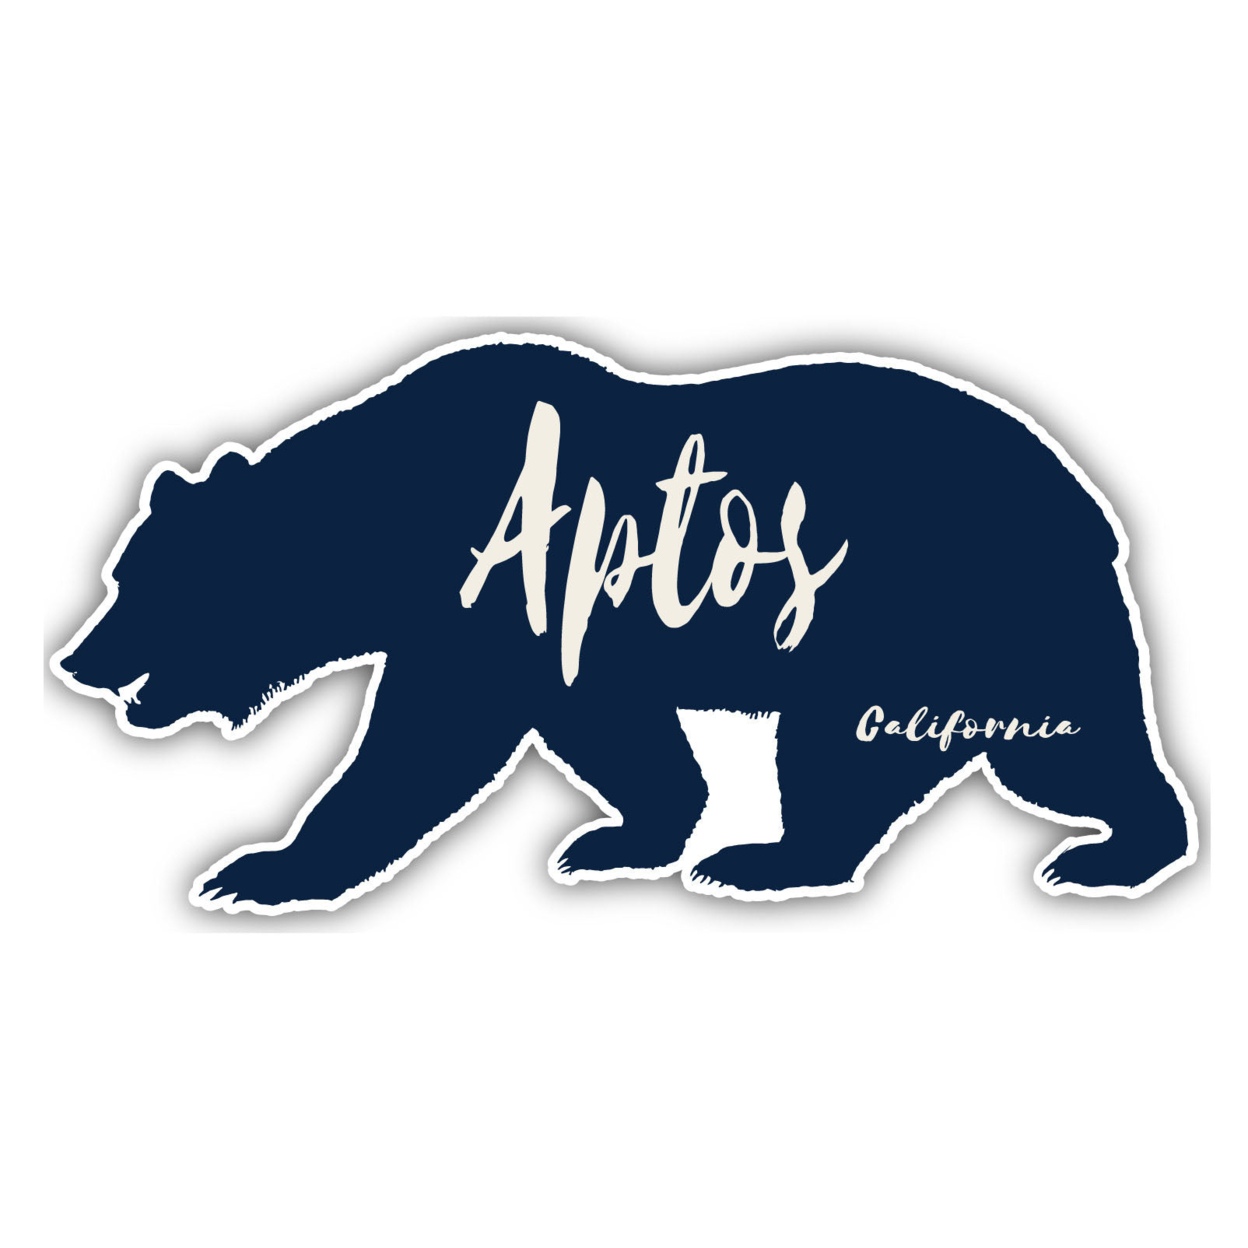 Aptos California Souvenir Decorative Stickers (Choose Theme And Size) - Single Unit, 8-Inch, Adventures Awaits